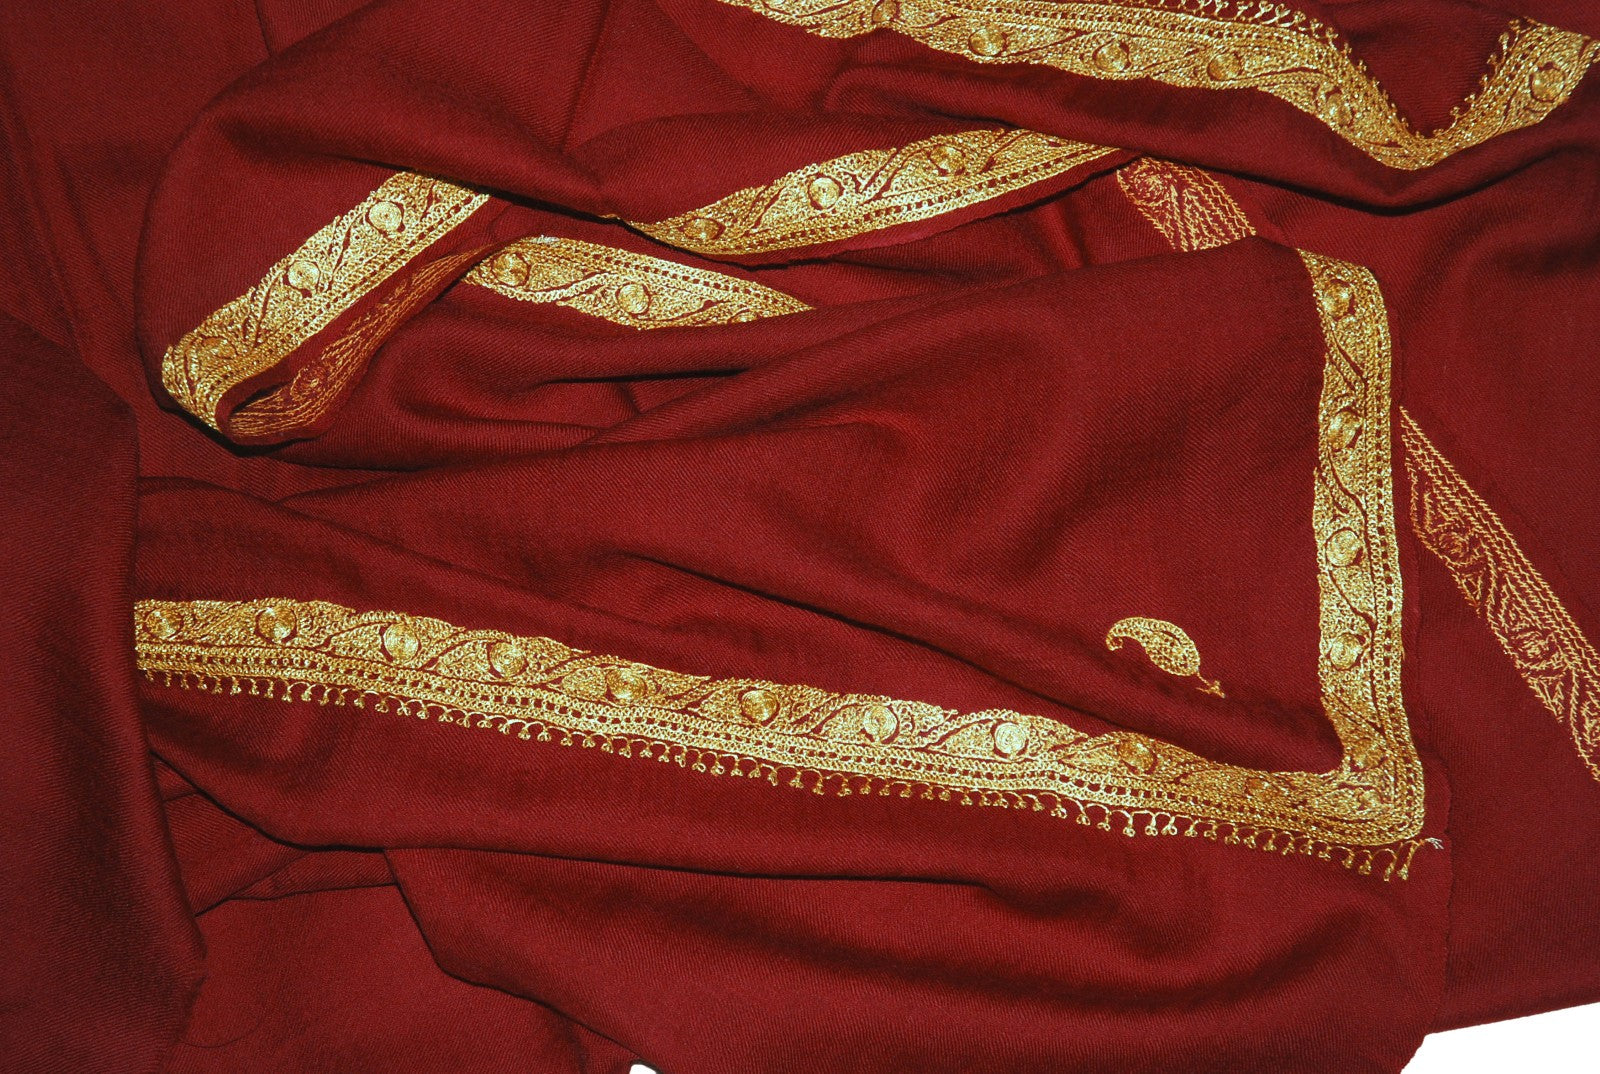 Embroidered Wool Shawl Maroon, Gold "Tilla" Sozni Embroidery #WS-922